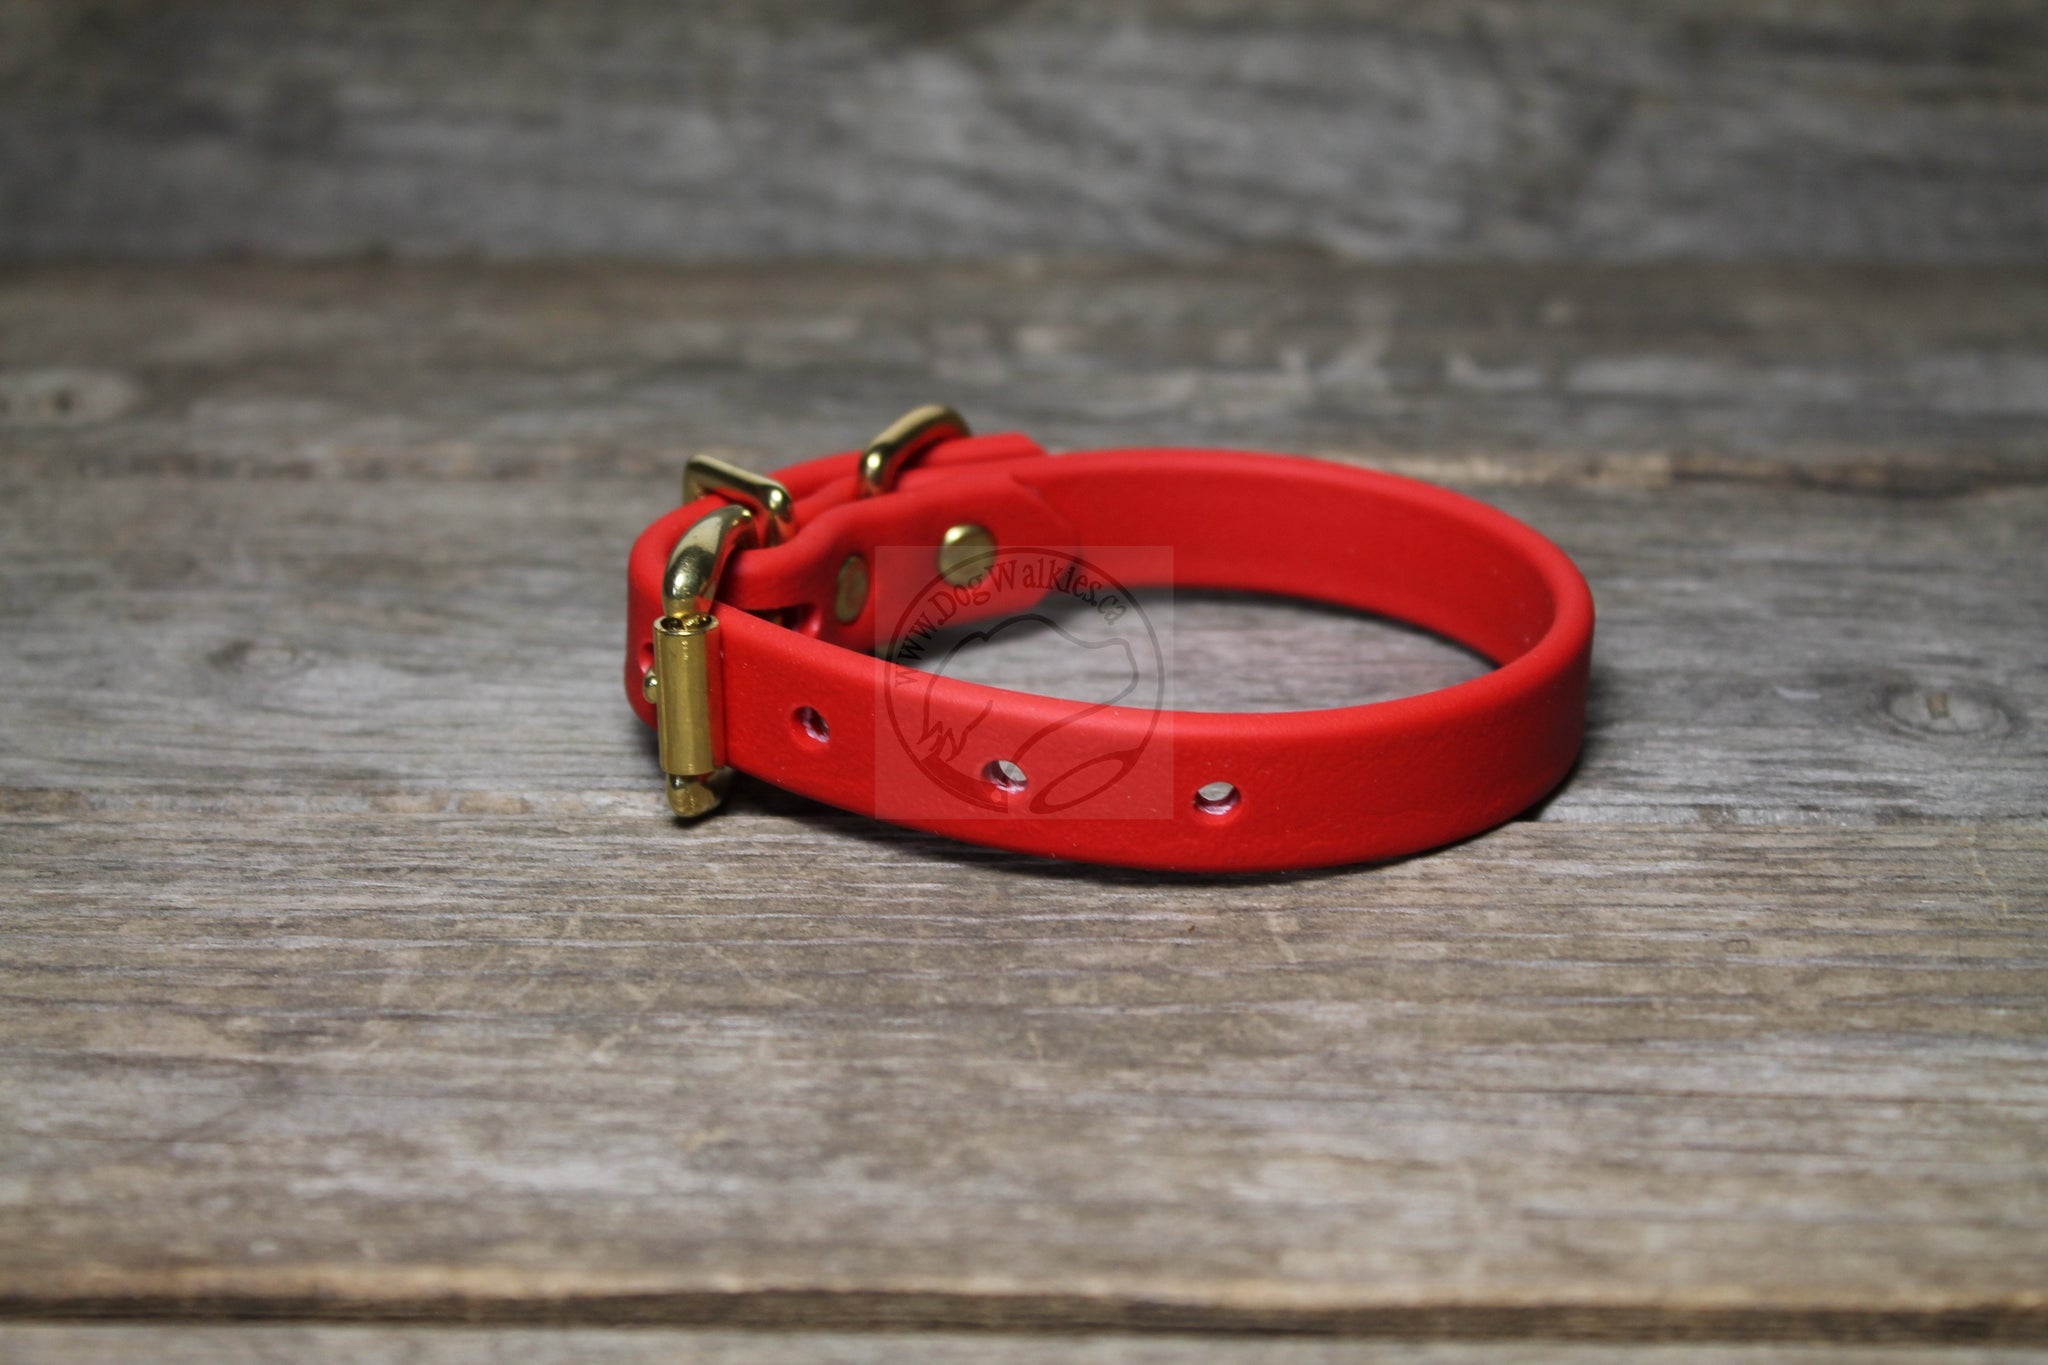 Poppy Red Biothane Dog Collar - 5/8"(16mm) wide